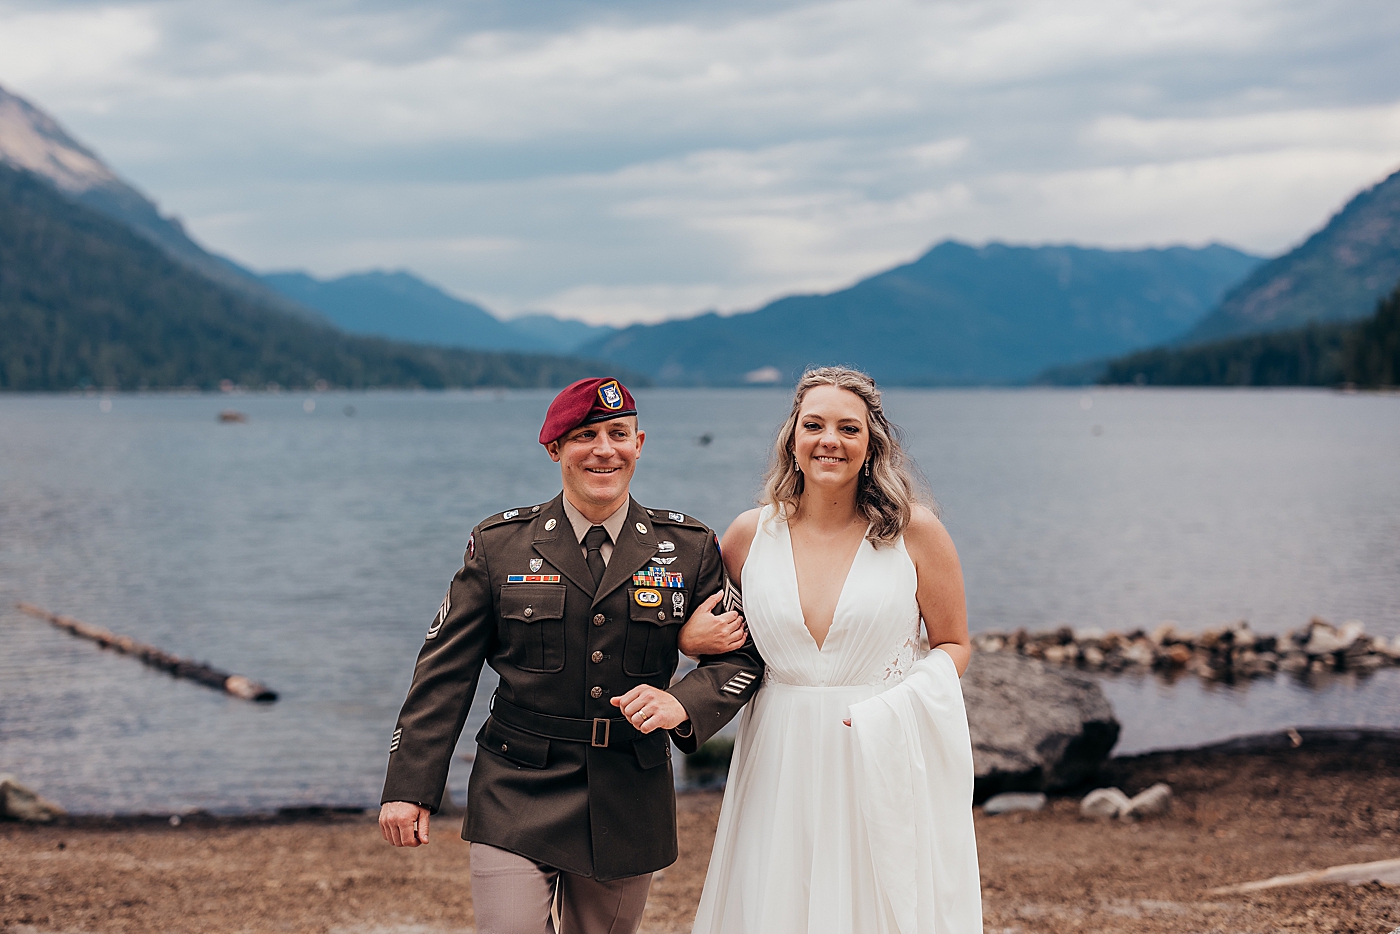 Military elopement in Leavenworth, WA. Photo by Megan Montalvo Photography.